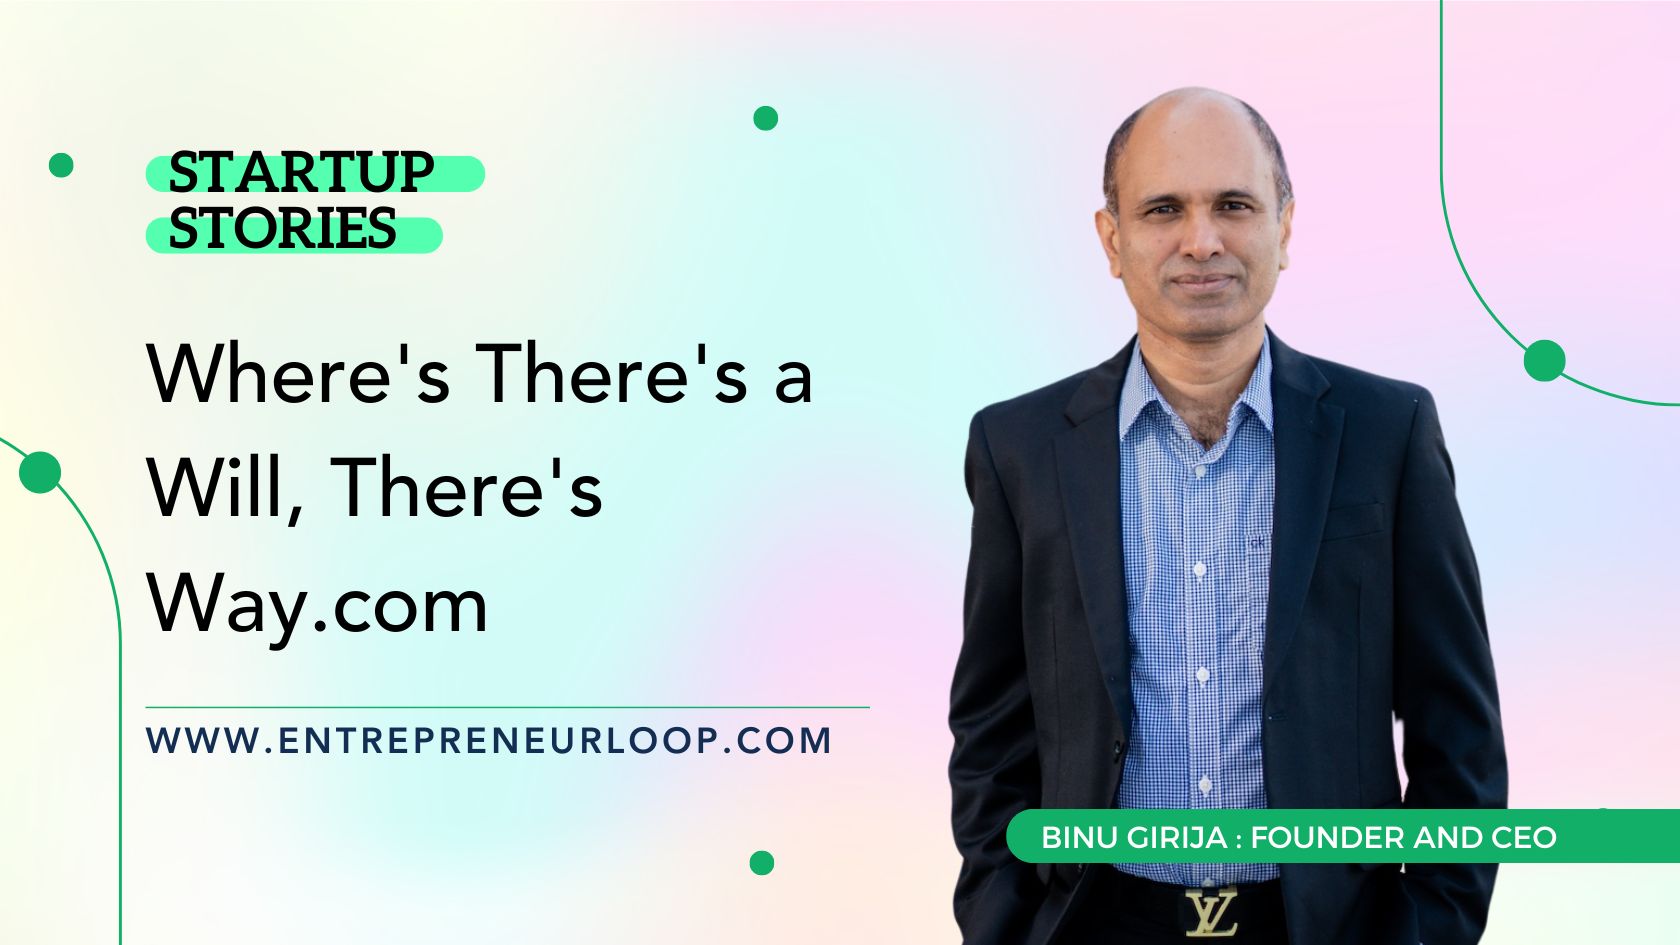 Binu Girija Founder and CEO Way.com